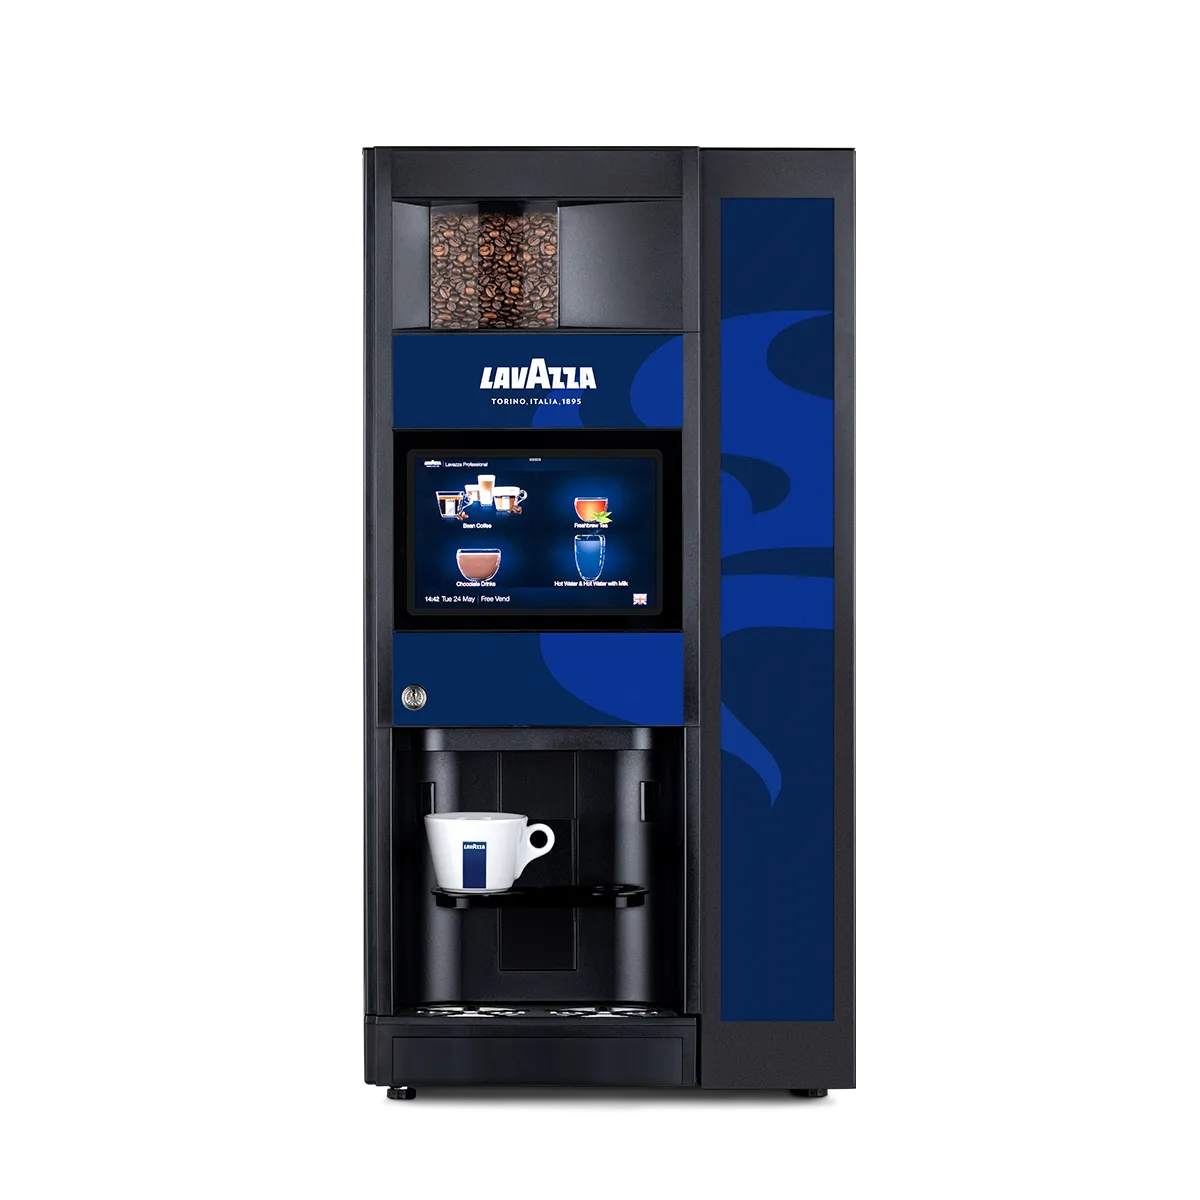 Lavazza 9100 Bean to Cup coffee machine